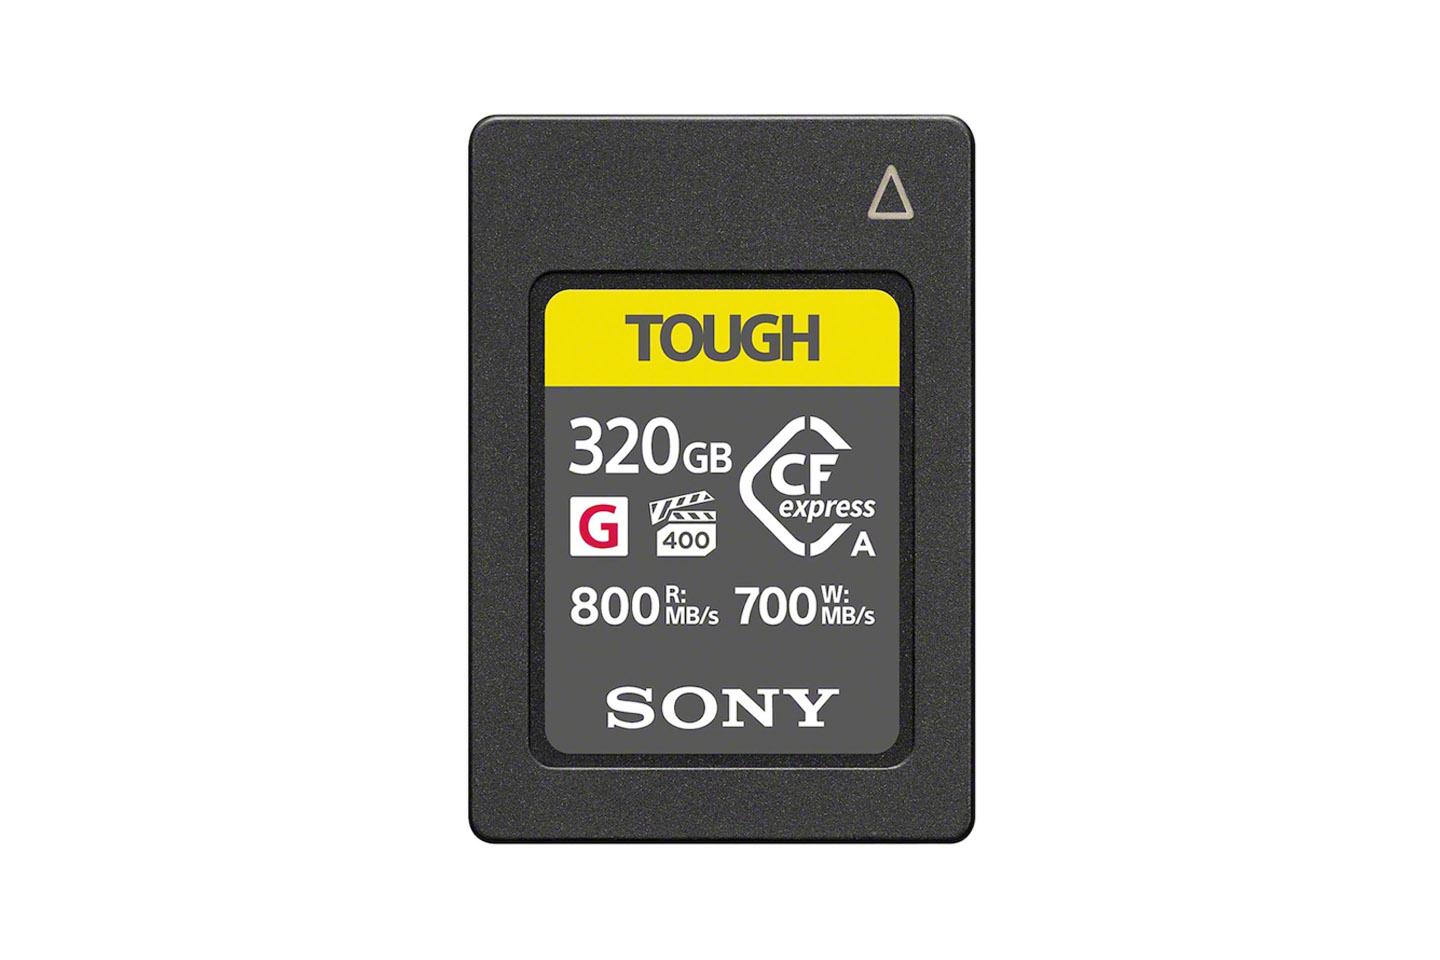 CFexpressTypeAカード320GB(SONY Tough G)